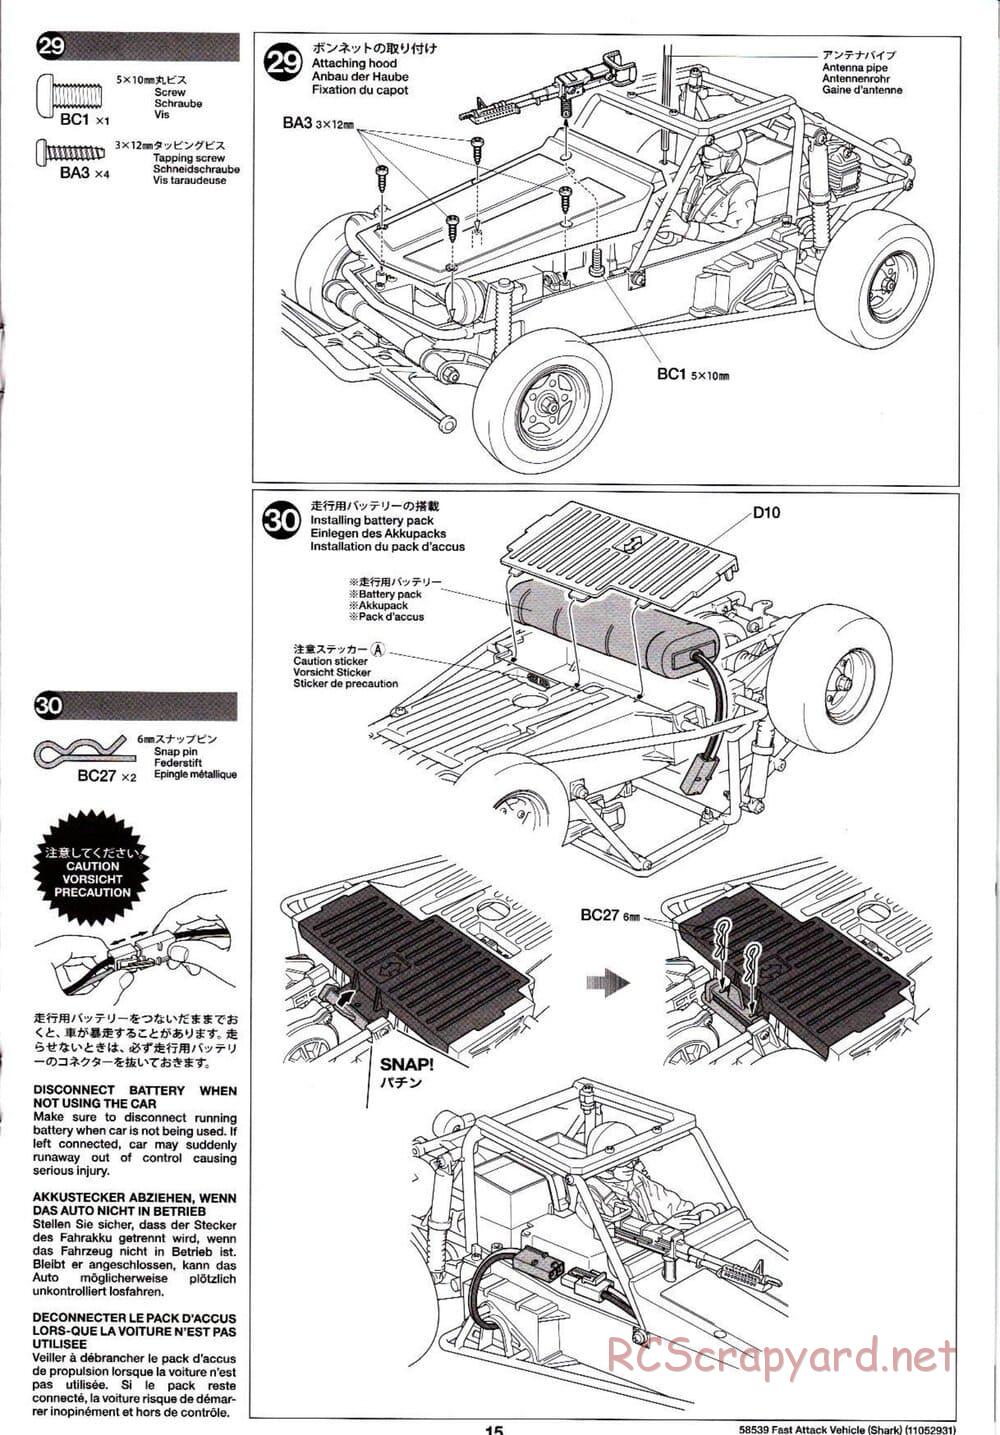 Tamiya - Fast Attack Vehicle w/ Shark Mouth - FAV Chassis - Manual - Page 15